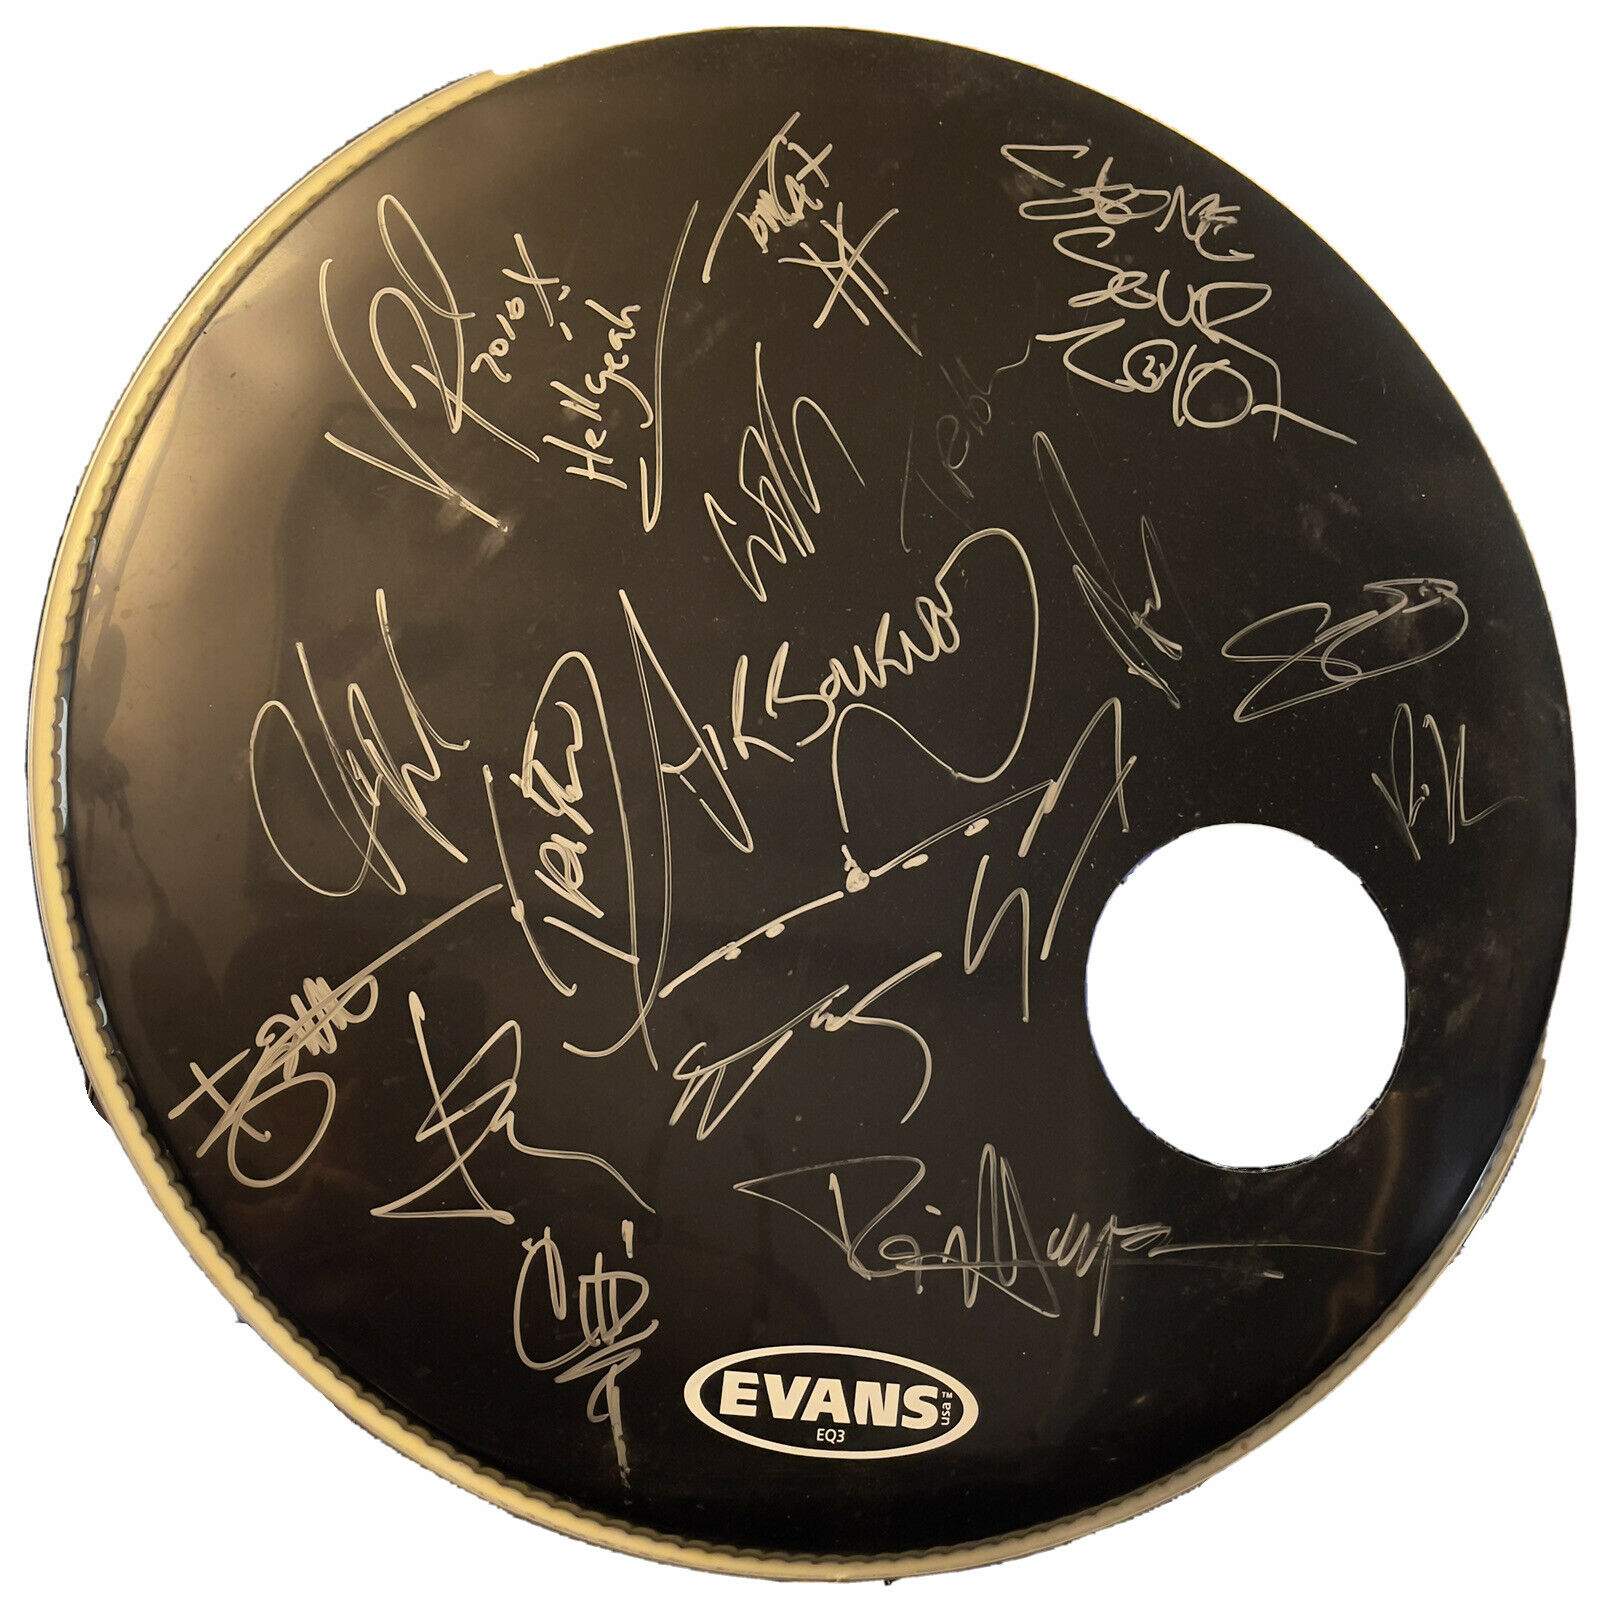 2010 Uproar Festival Bands Signed Bass Drum Head Vinnie Paul More Heavy Metal